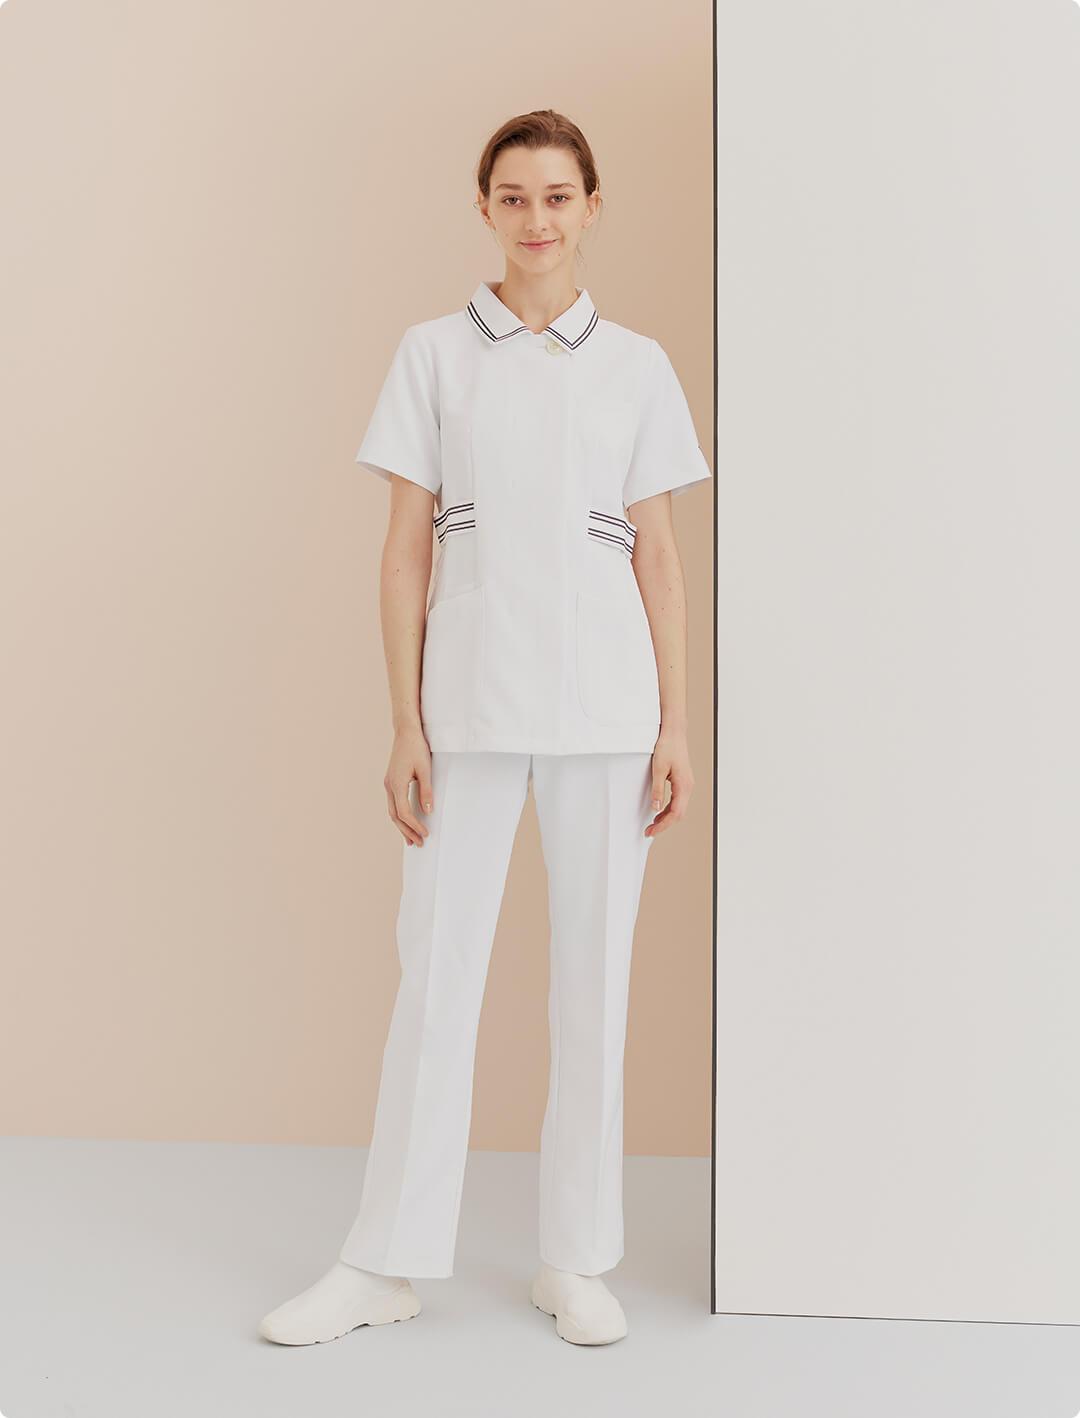 Line Collar Tops & <br class="u-spDb">Nurse Straight Pants